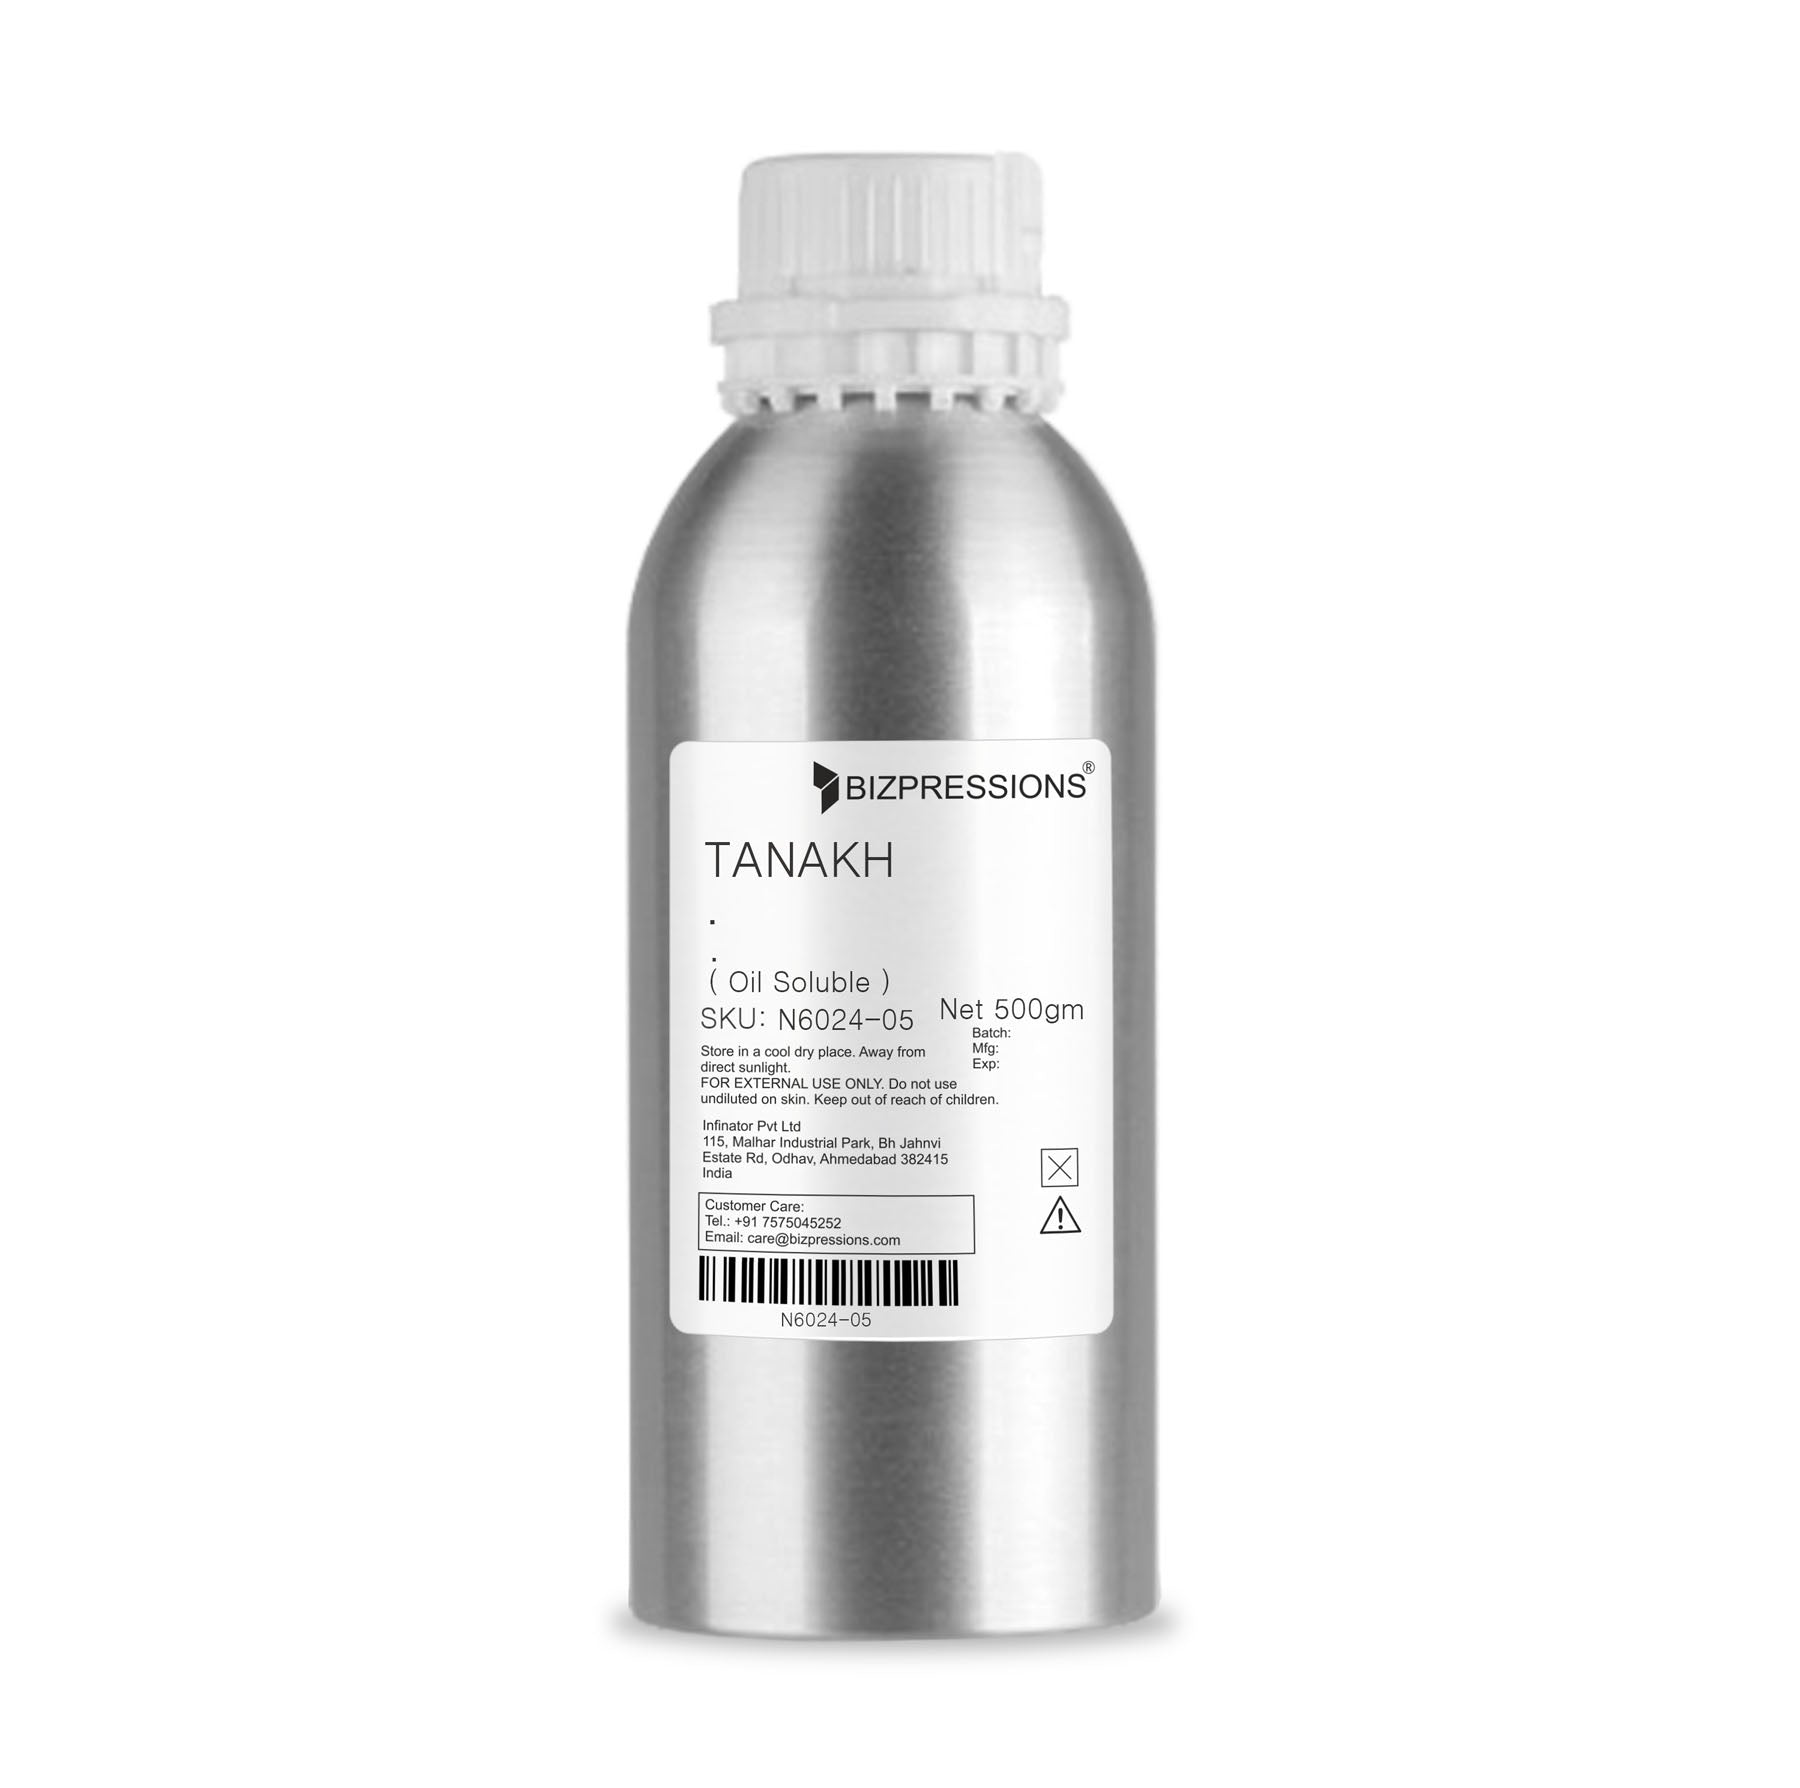 TANAKH - Fragrance ( Oil Soluble ) - 500 gm